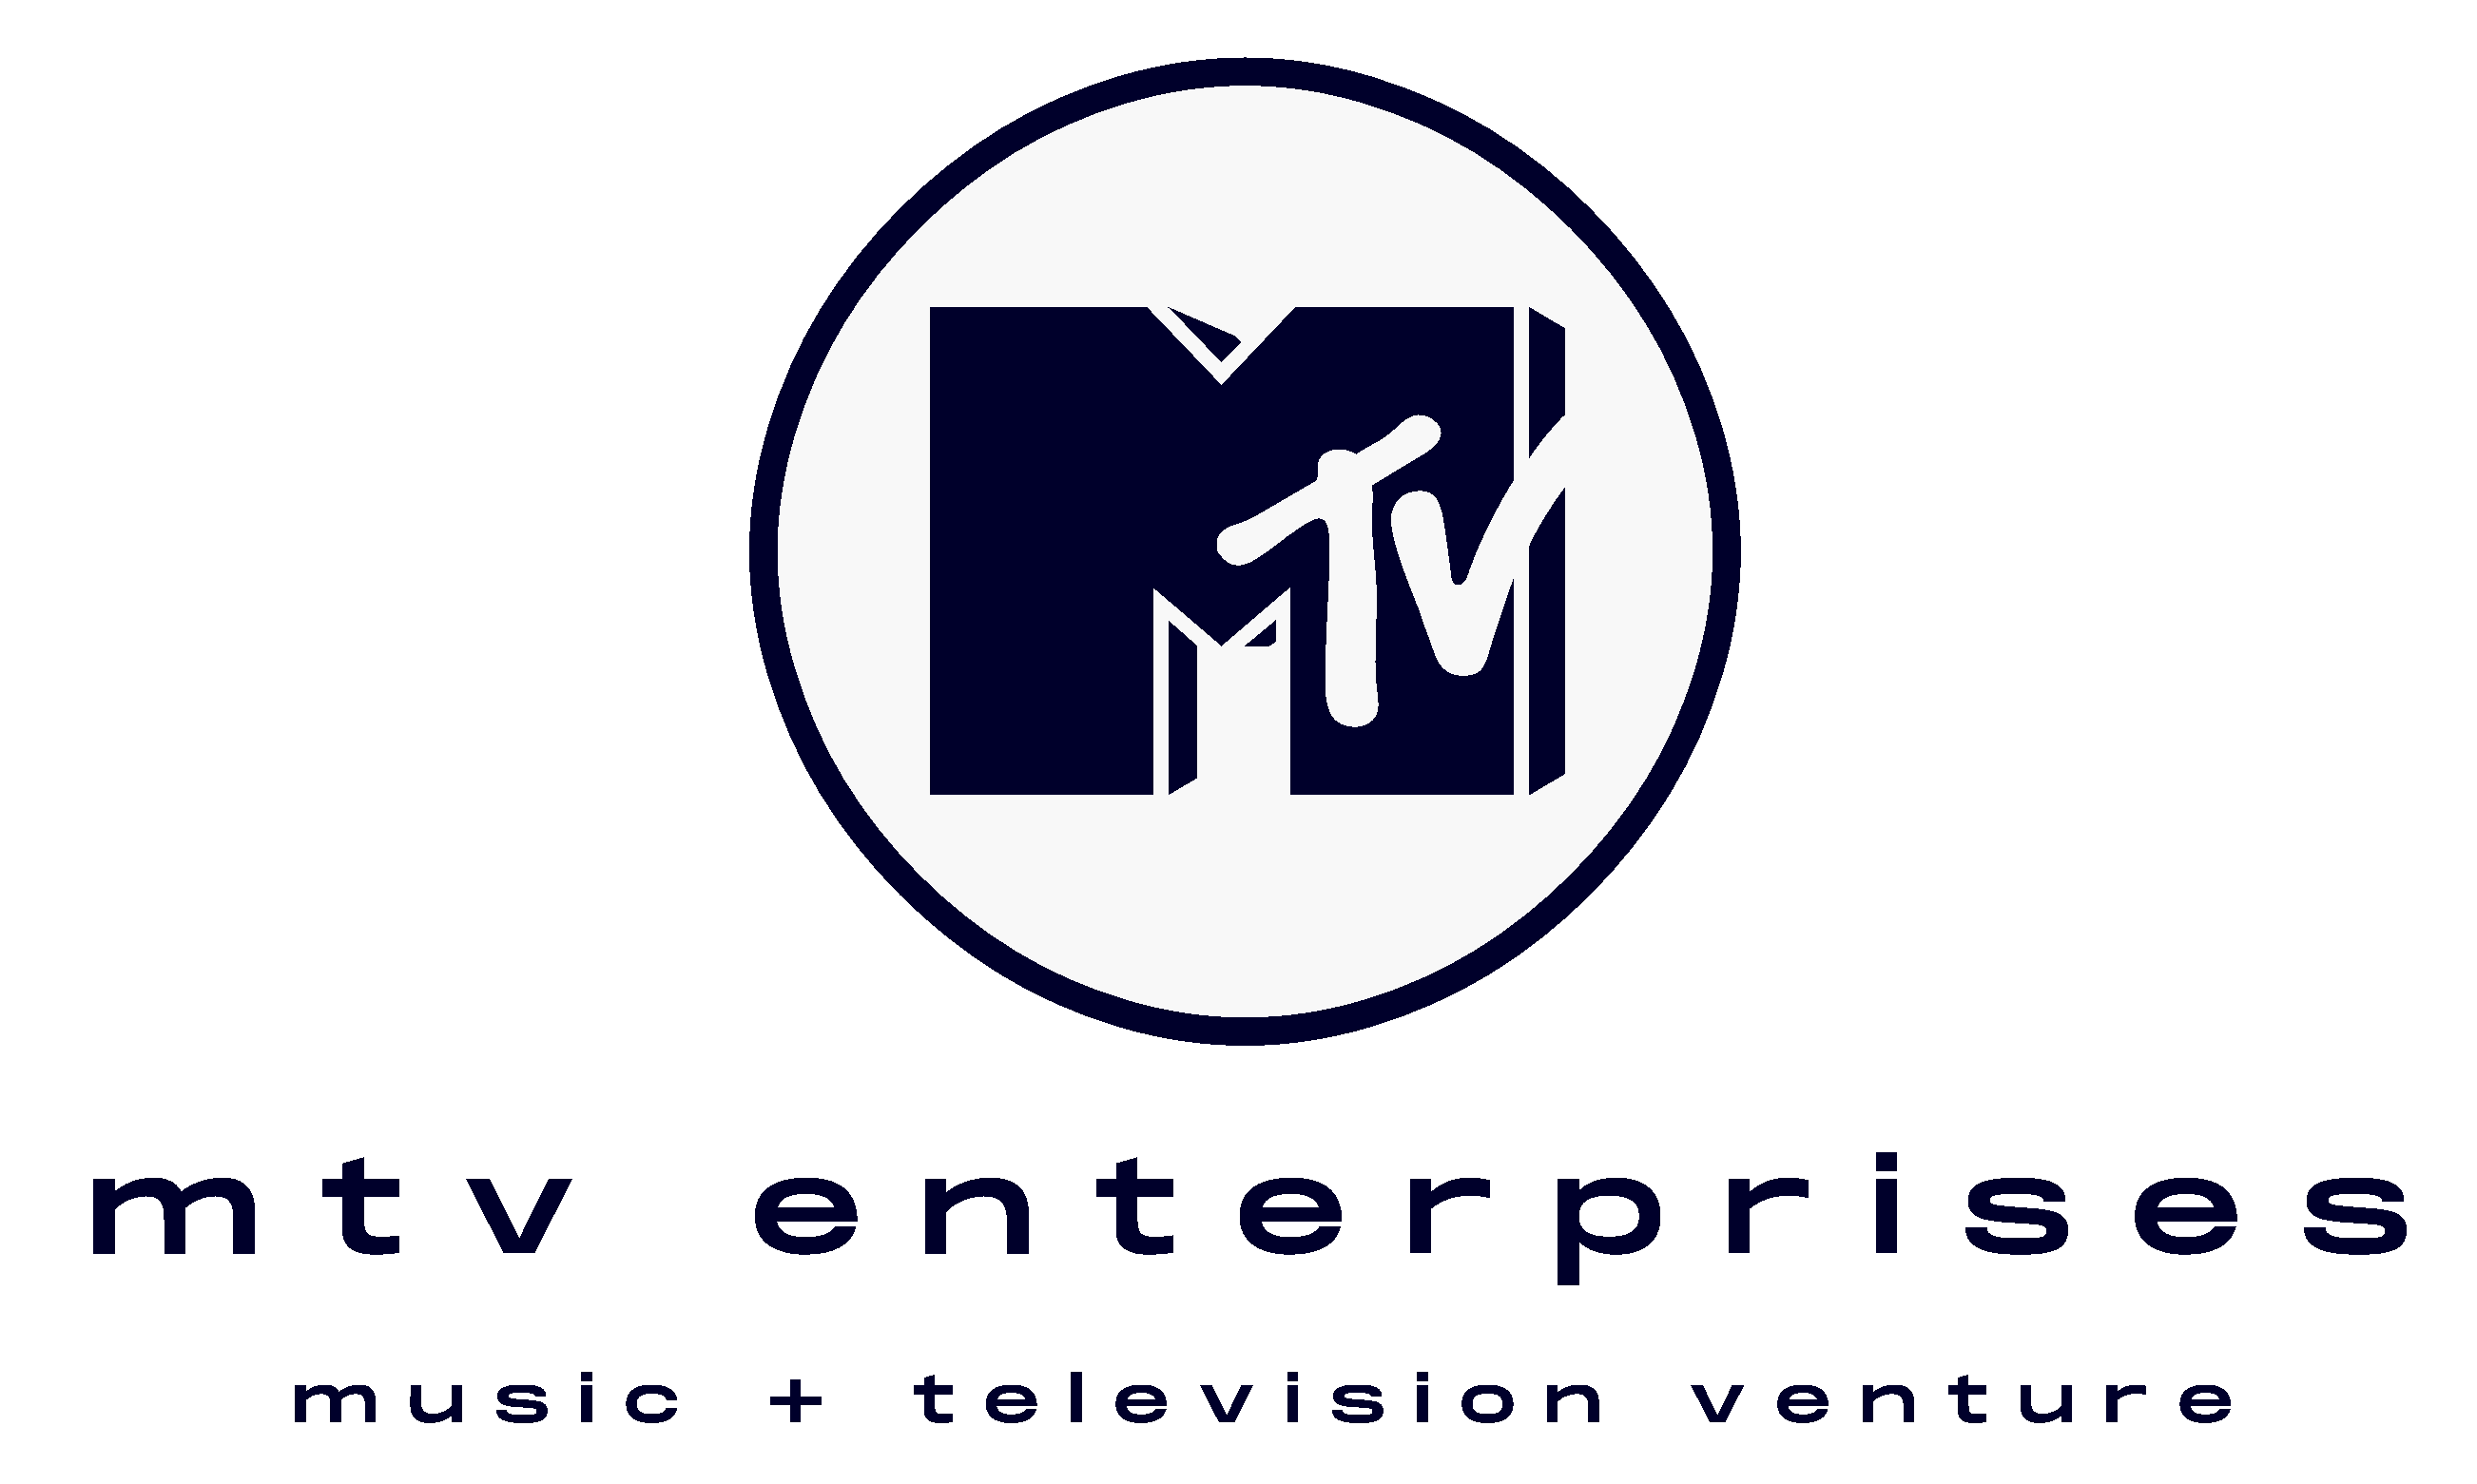 Music & Television Venture (MTV) Enterprises logo.png